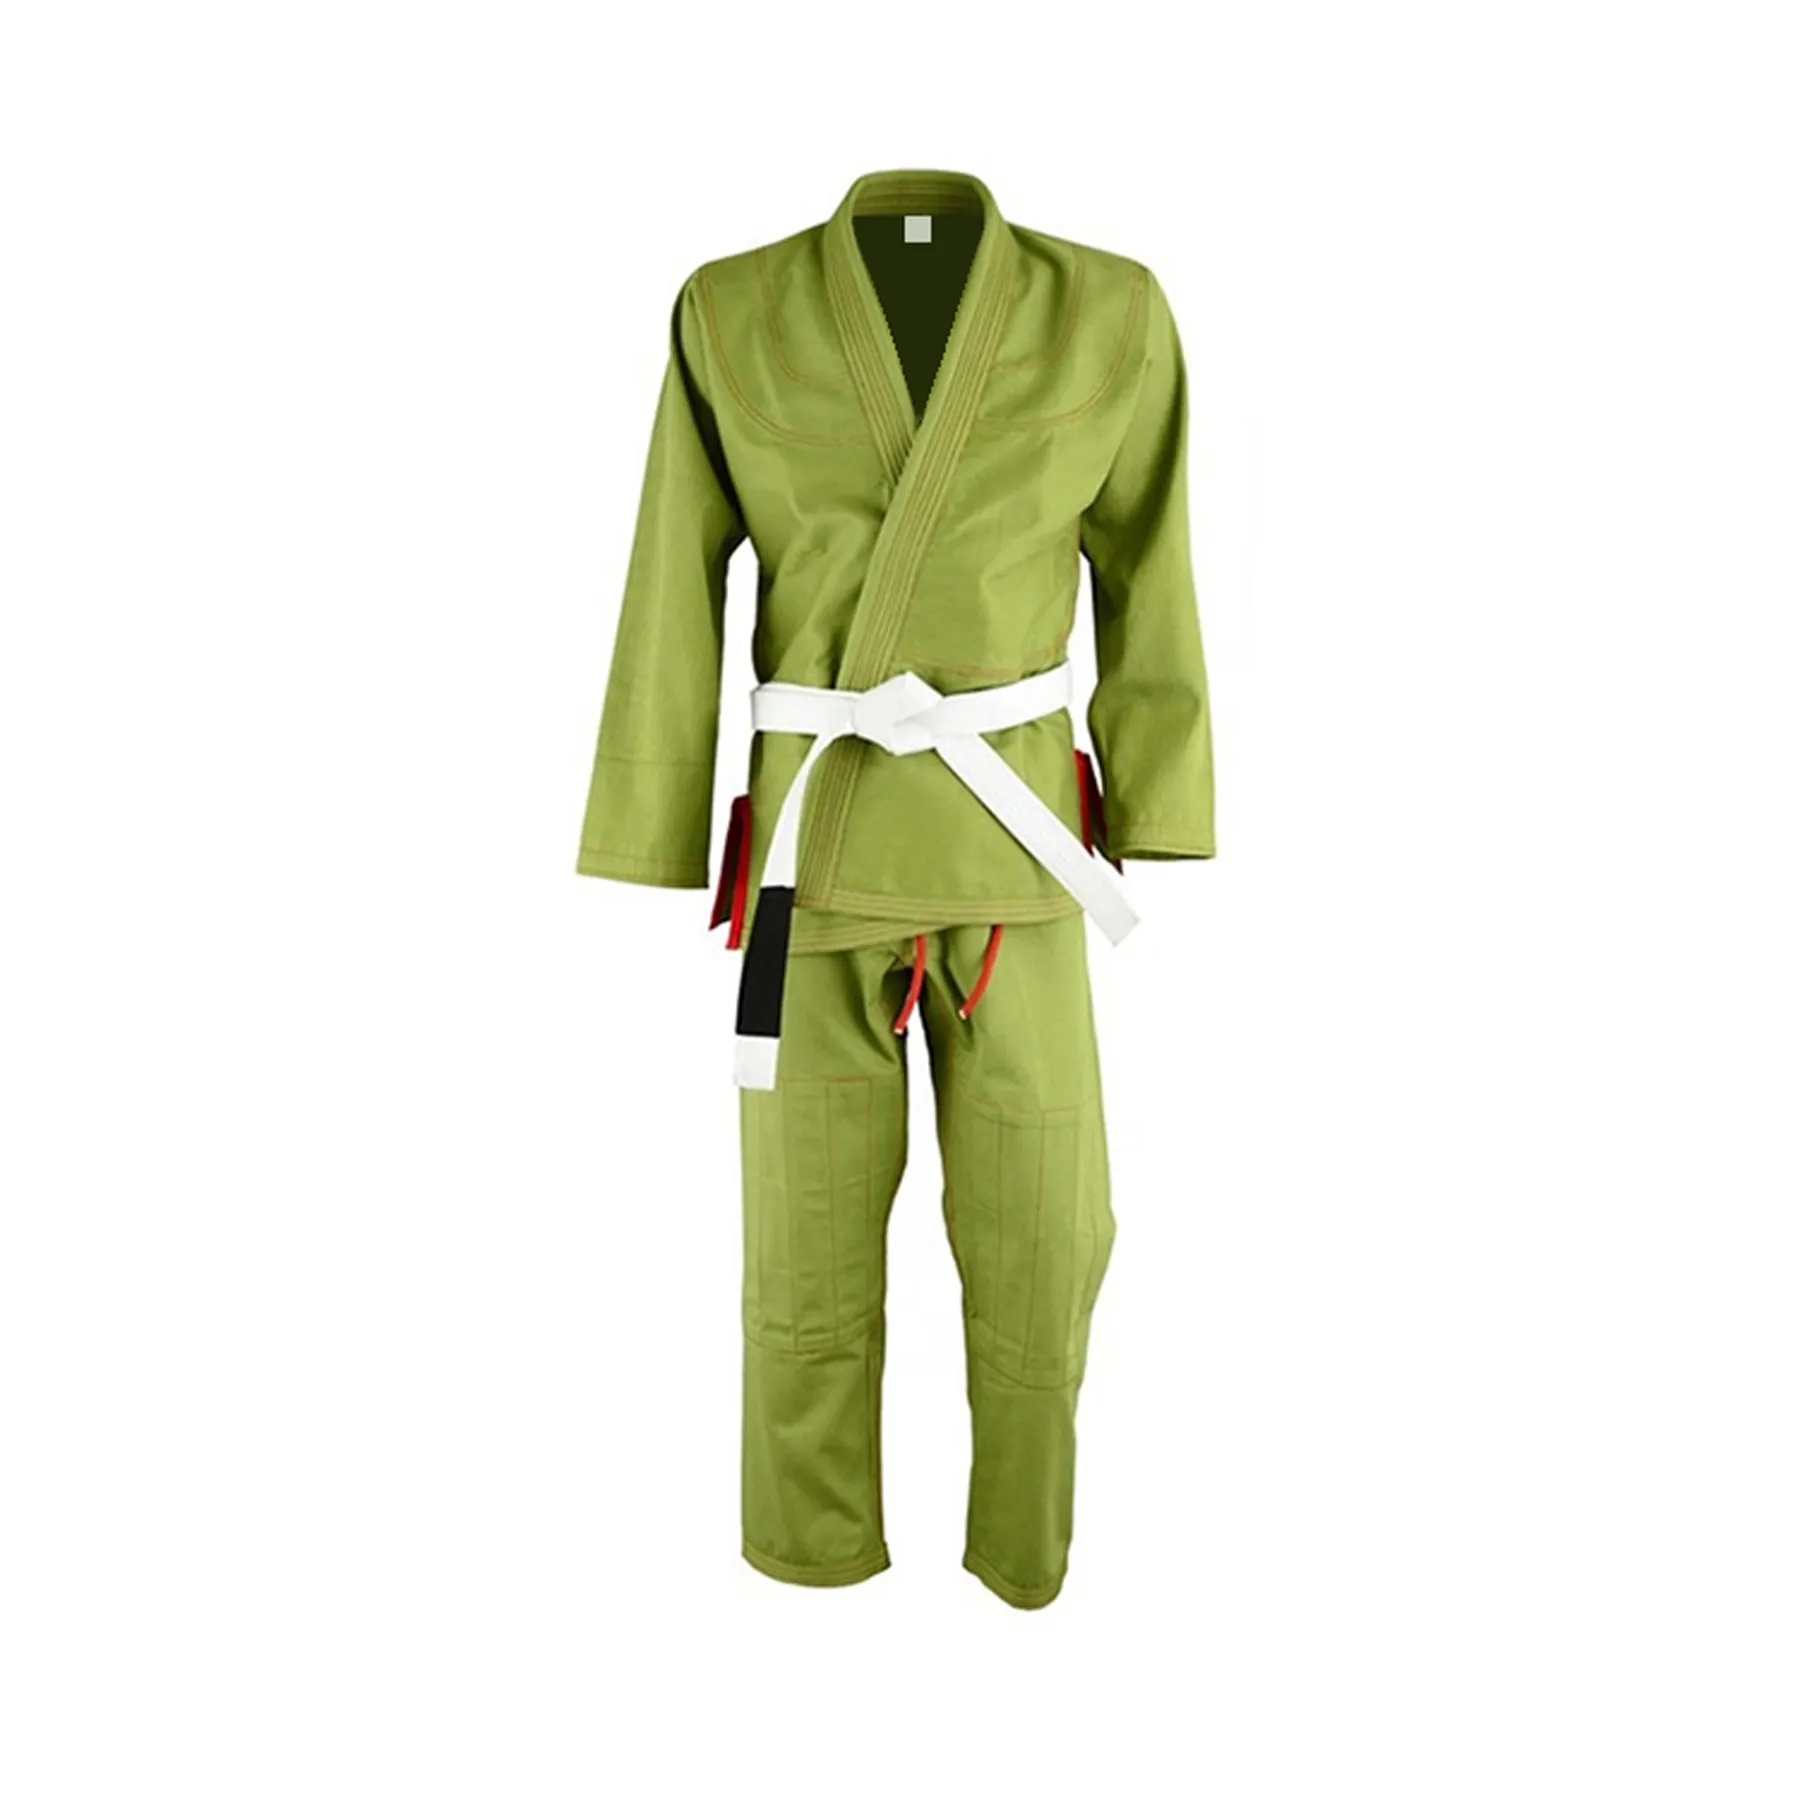 Uniforme de Karate hecho a medida de alta calidad profesional de artes marciales/Karate Gi /Karate Suit Pro Quality